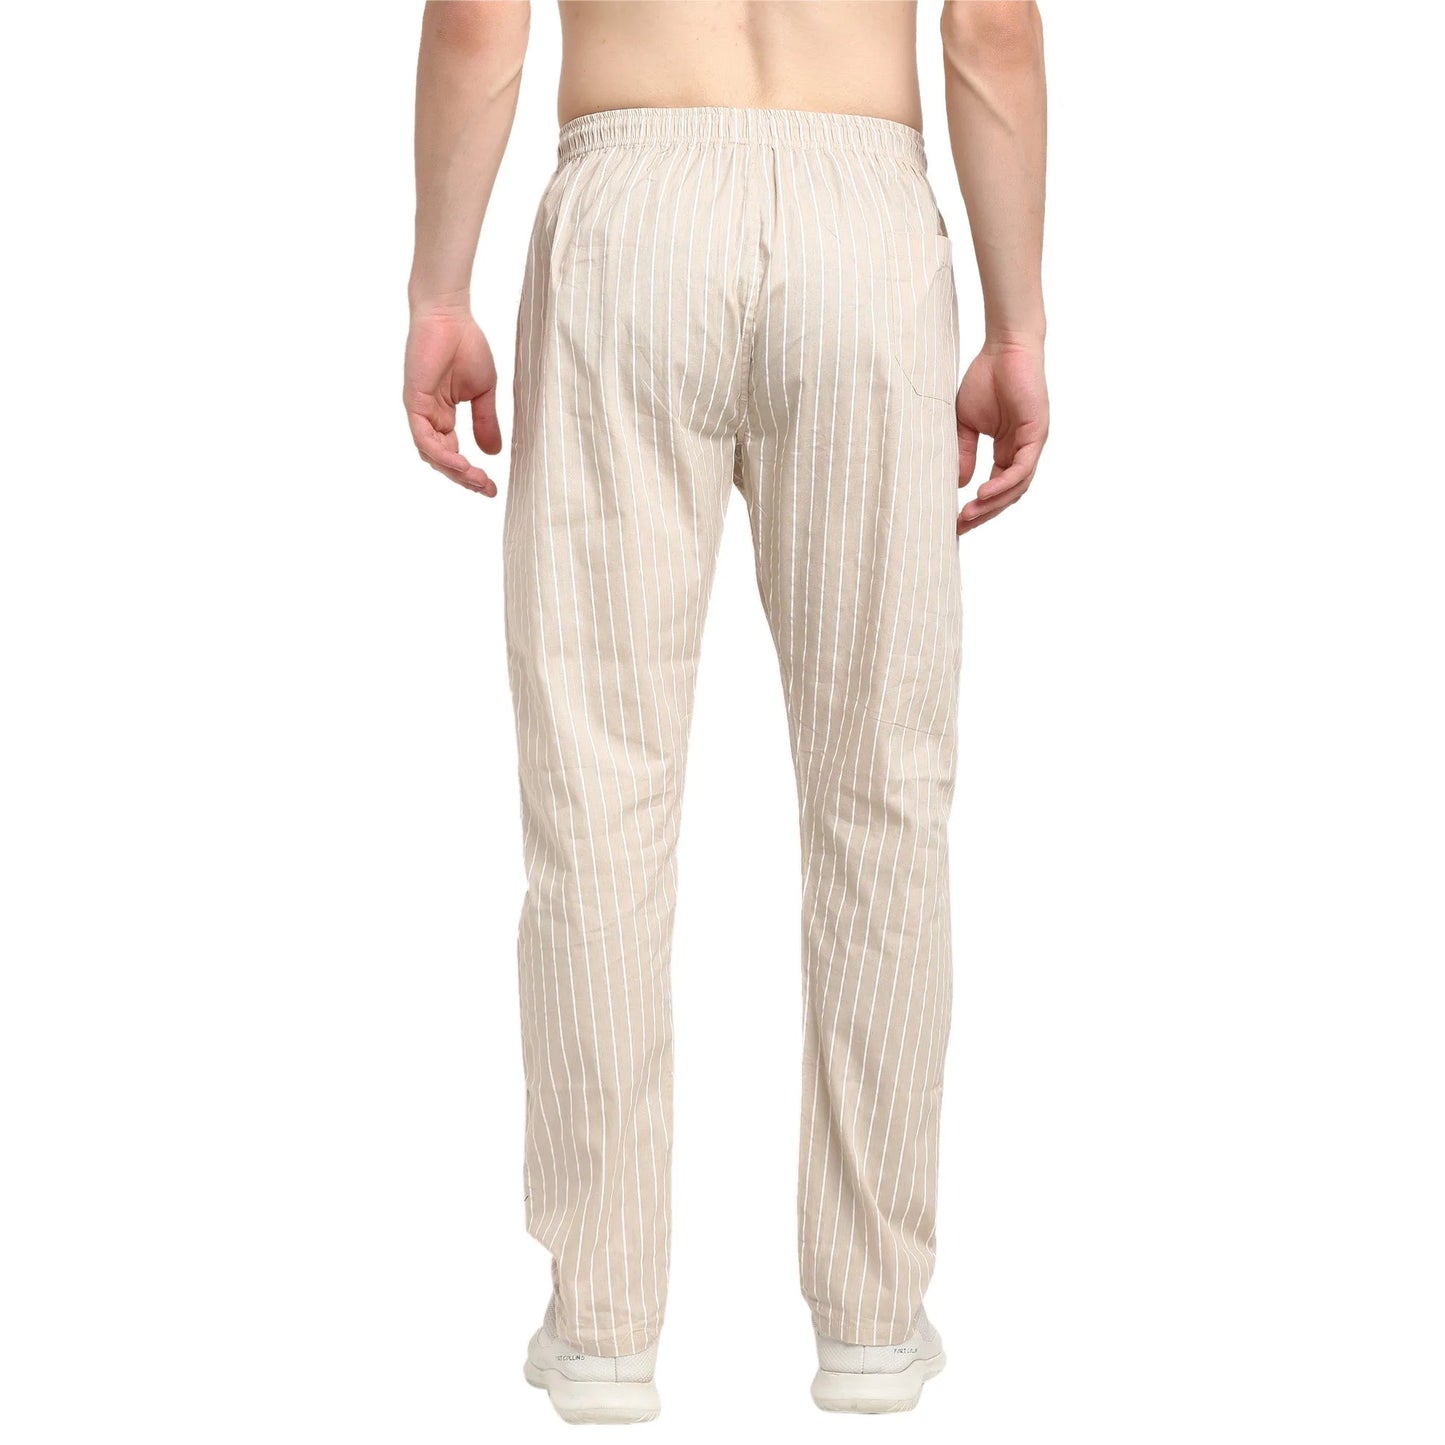 Jainish Men's Beige Cotton Striped Track Pants ( JOG 020Cream )